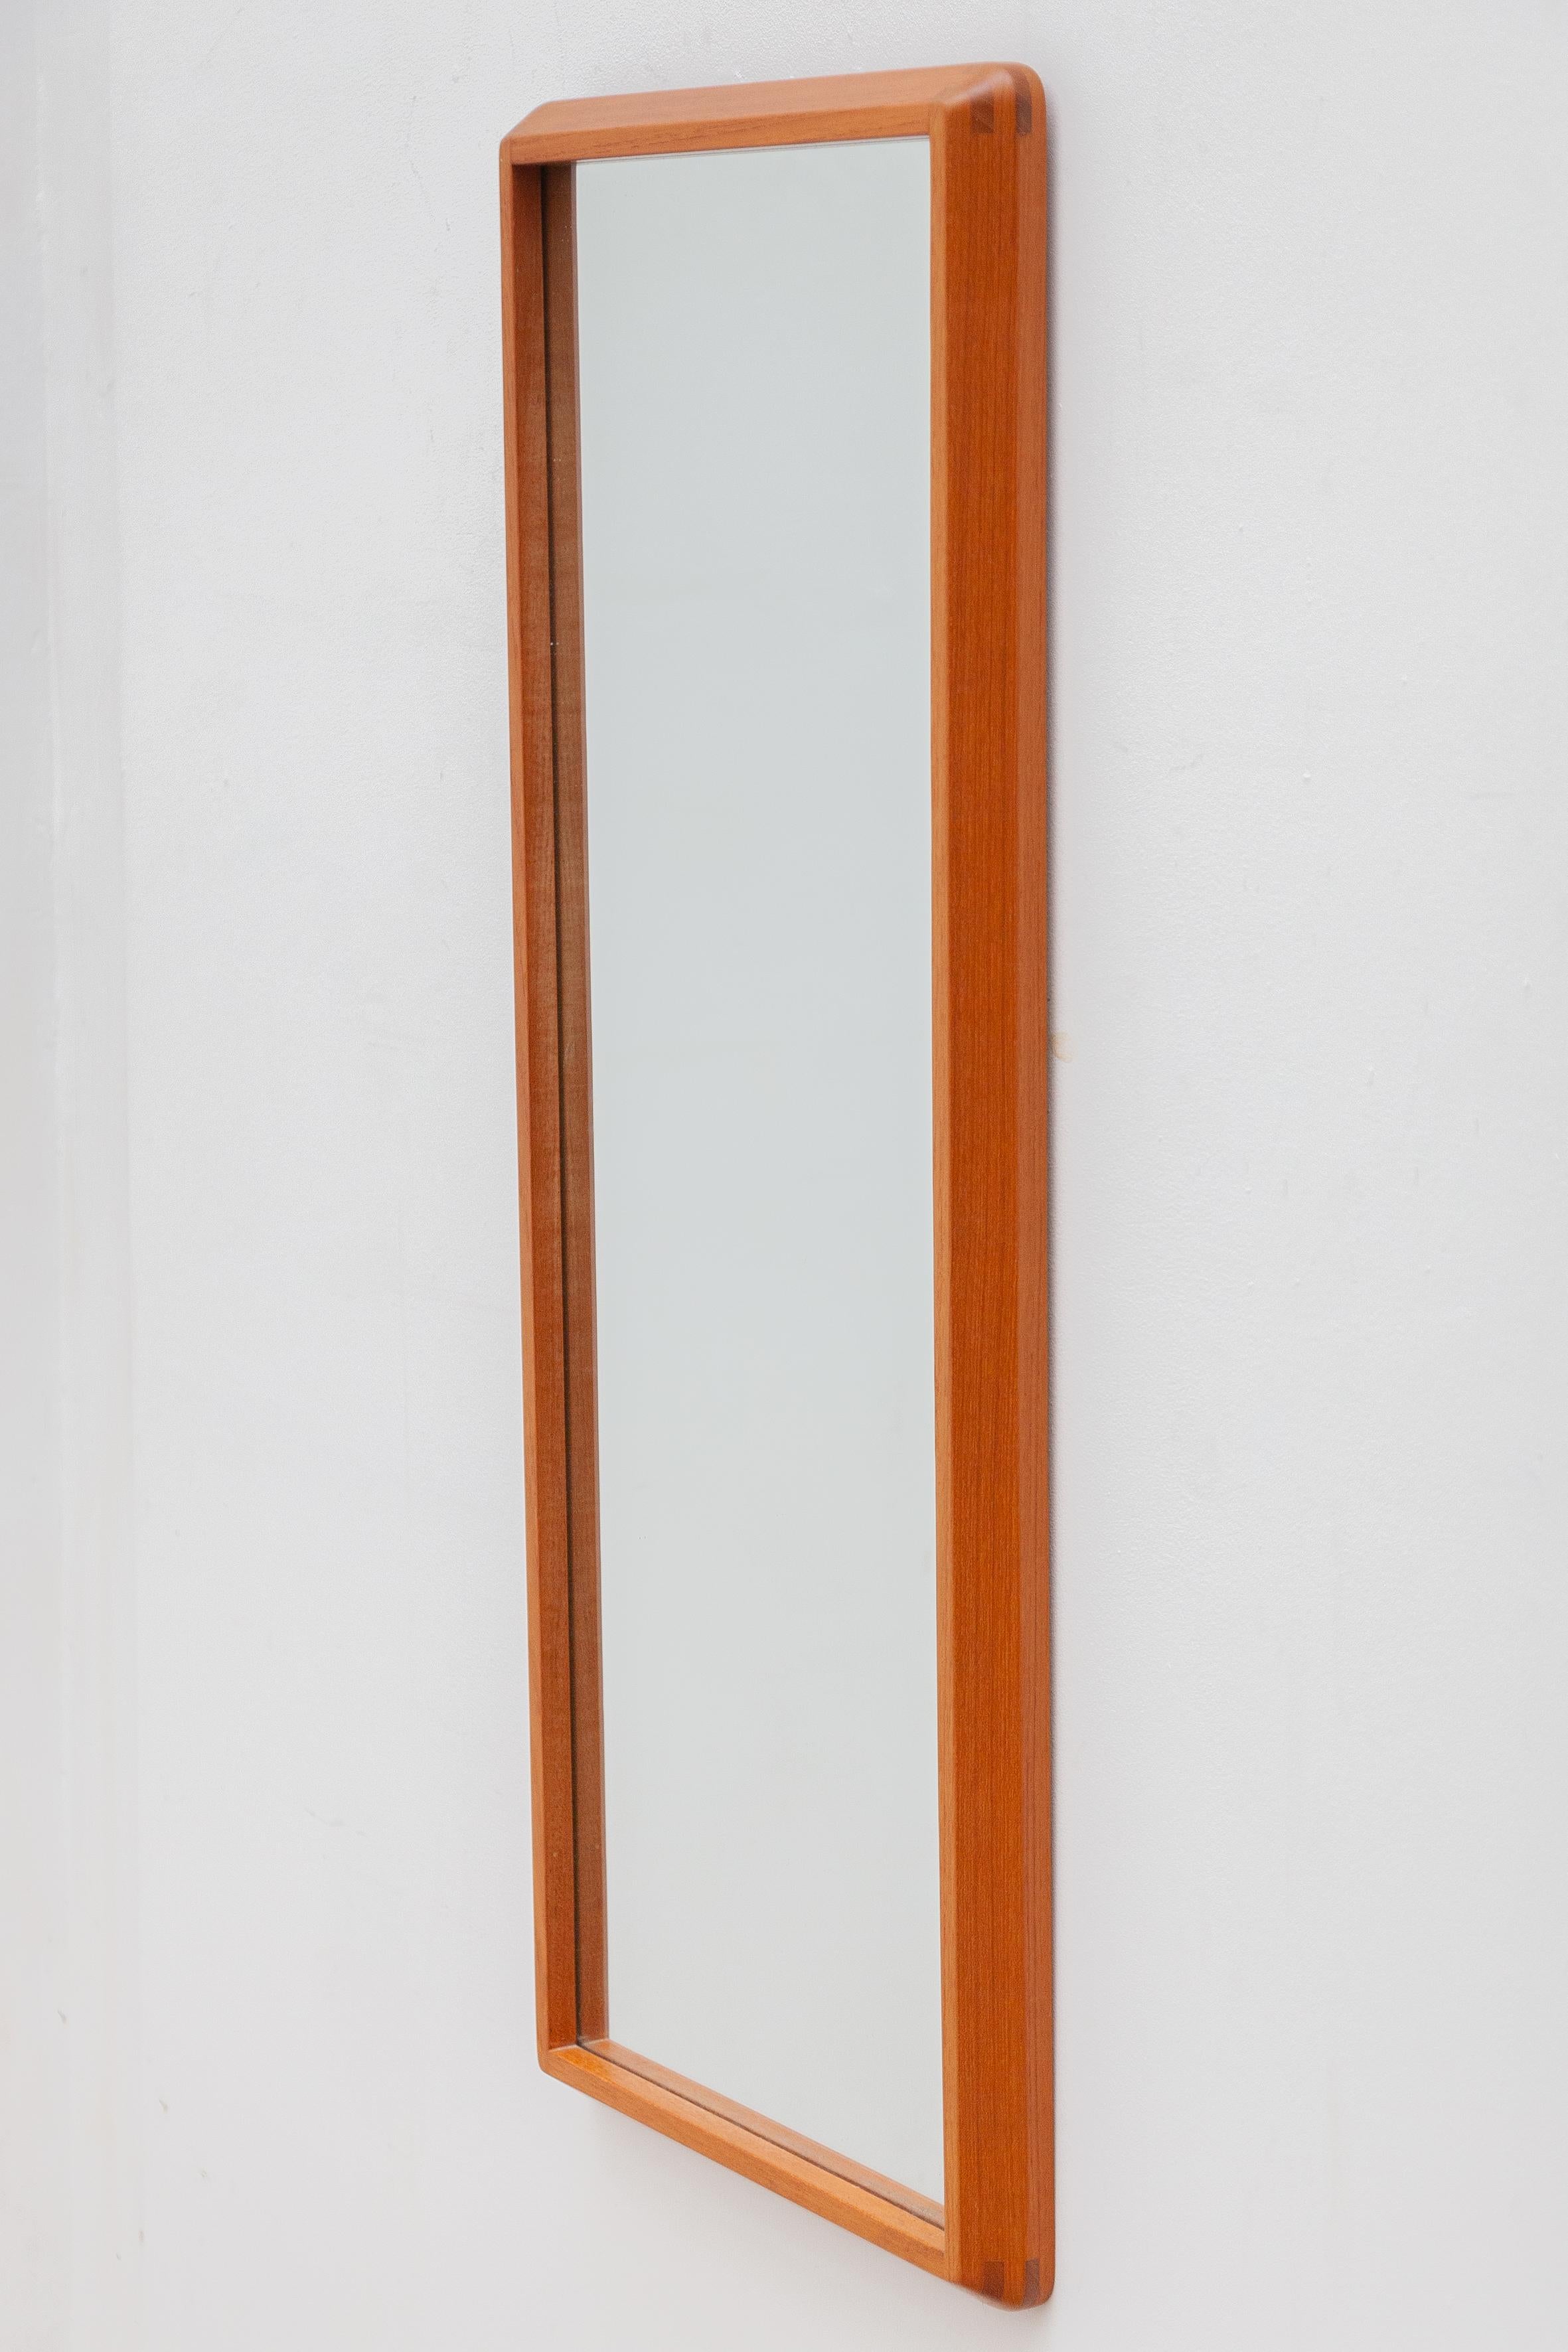 Scandinavian Modern Large Rectangular Wall Mirror by Kai Kristiansen for Aksel Kjersgaard, 1960s For Sale